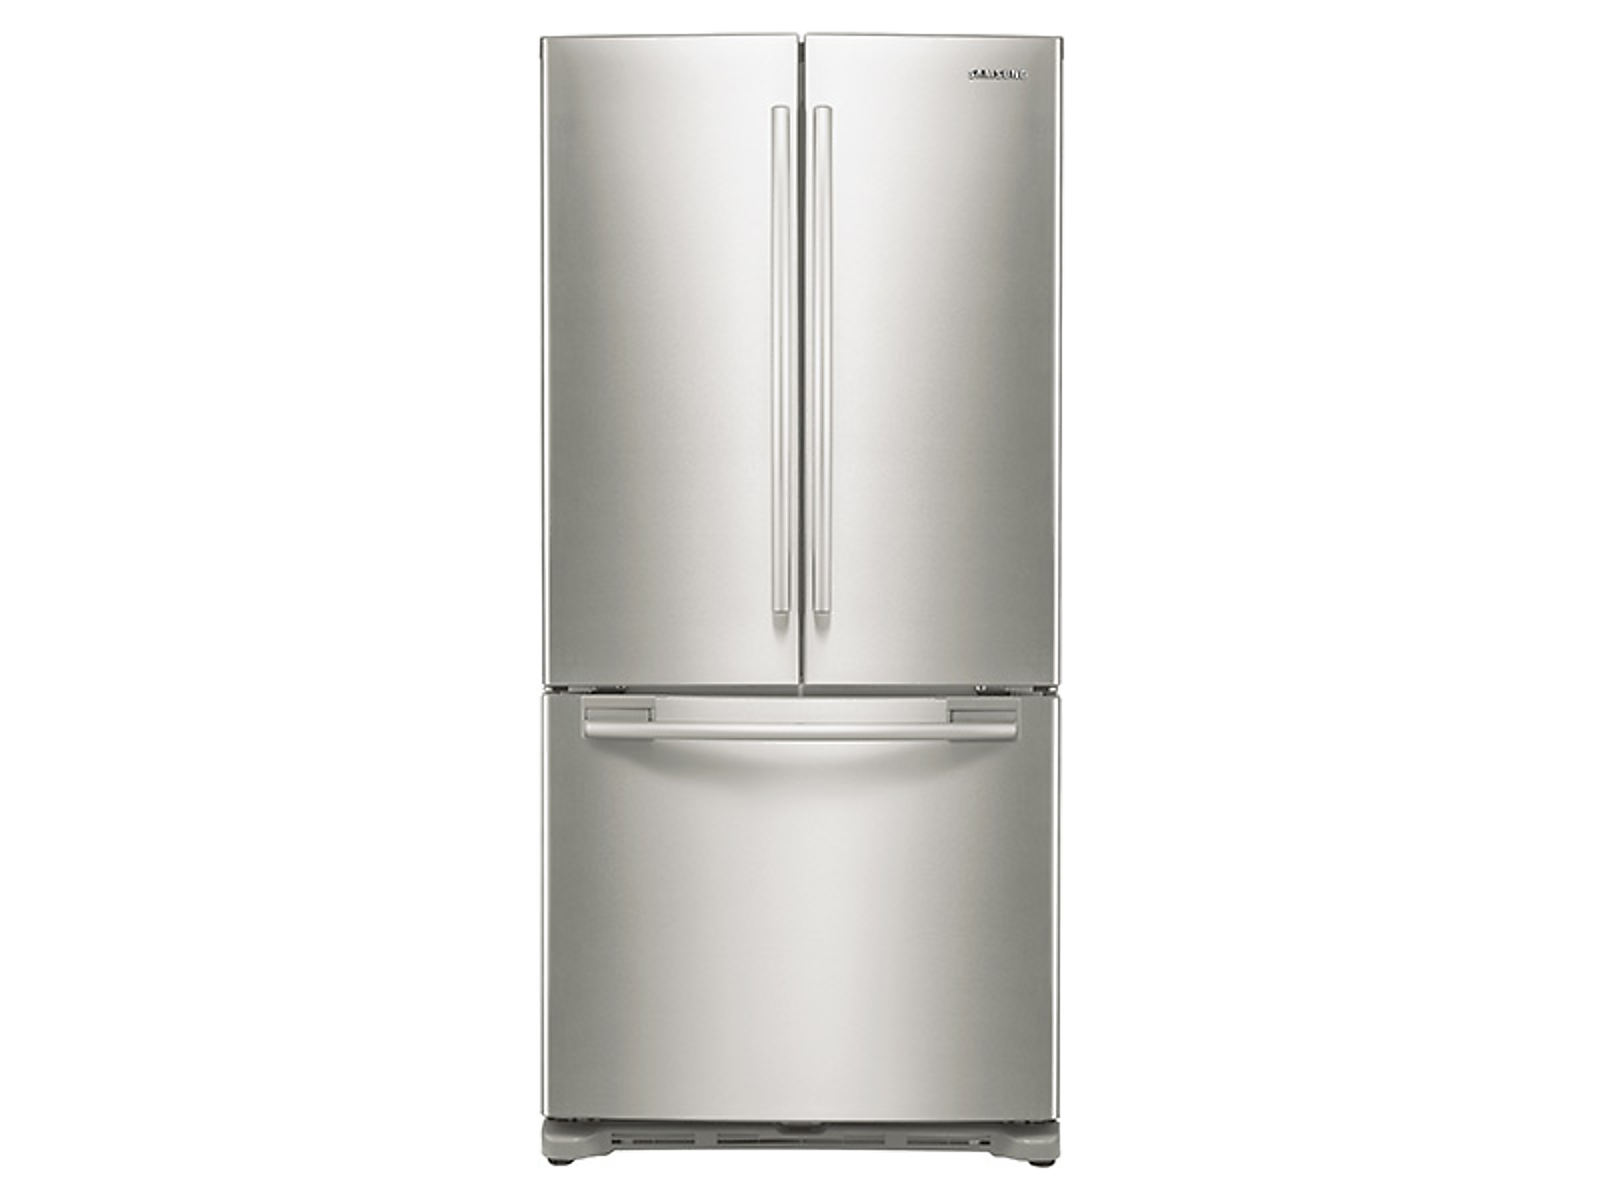 Samsung 18 cu. ft. Counter Depth French Door Refrigerator in Stainless Platinum(RF18HFENBSP/AA) photo